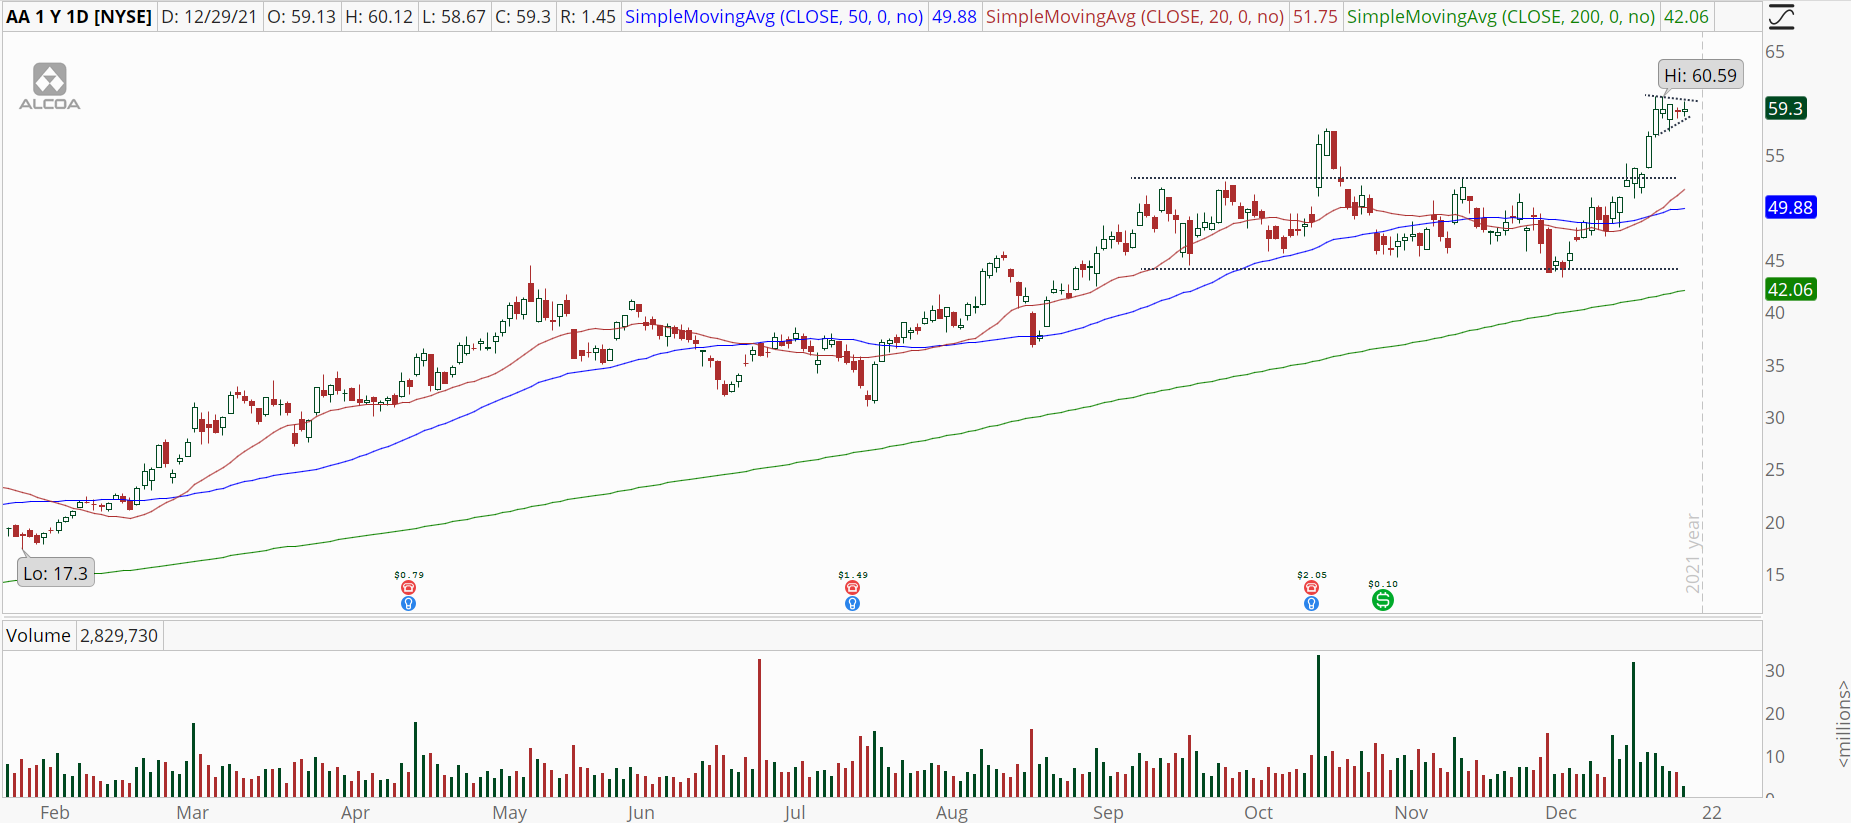 Alcoa (AA) stock chart with increasing momentum uptrend.